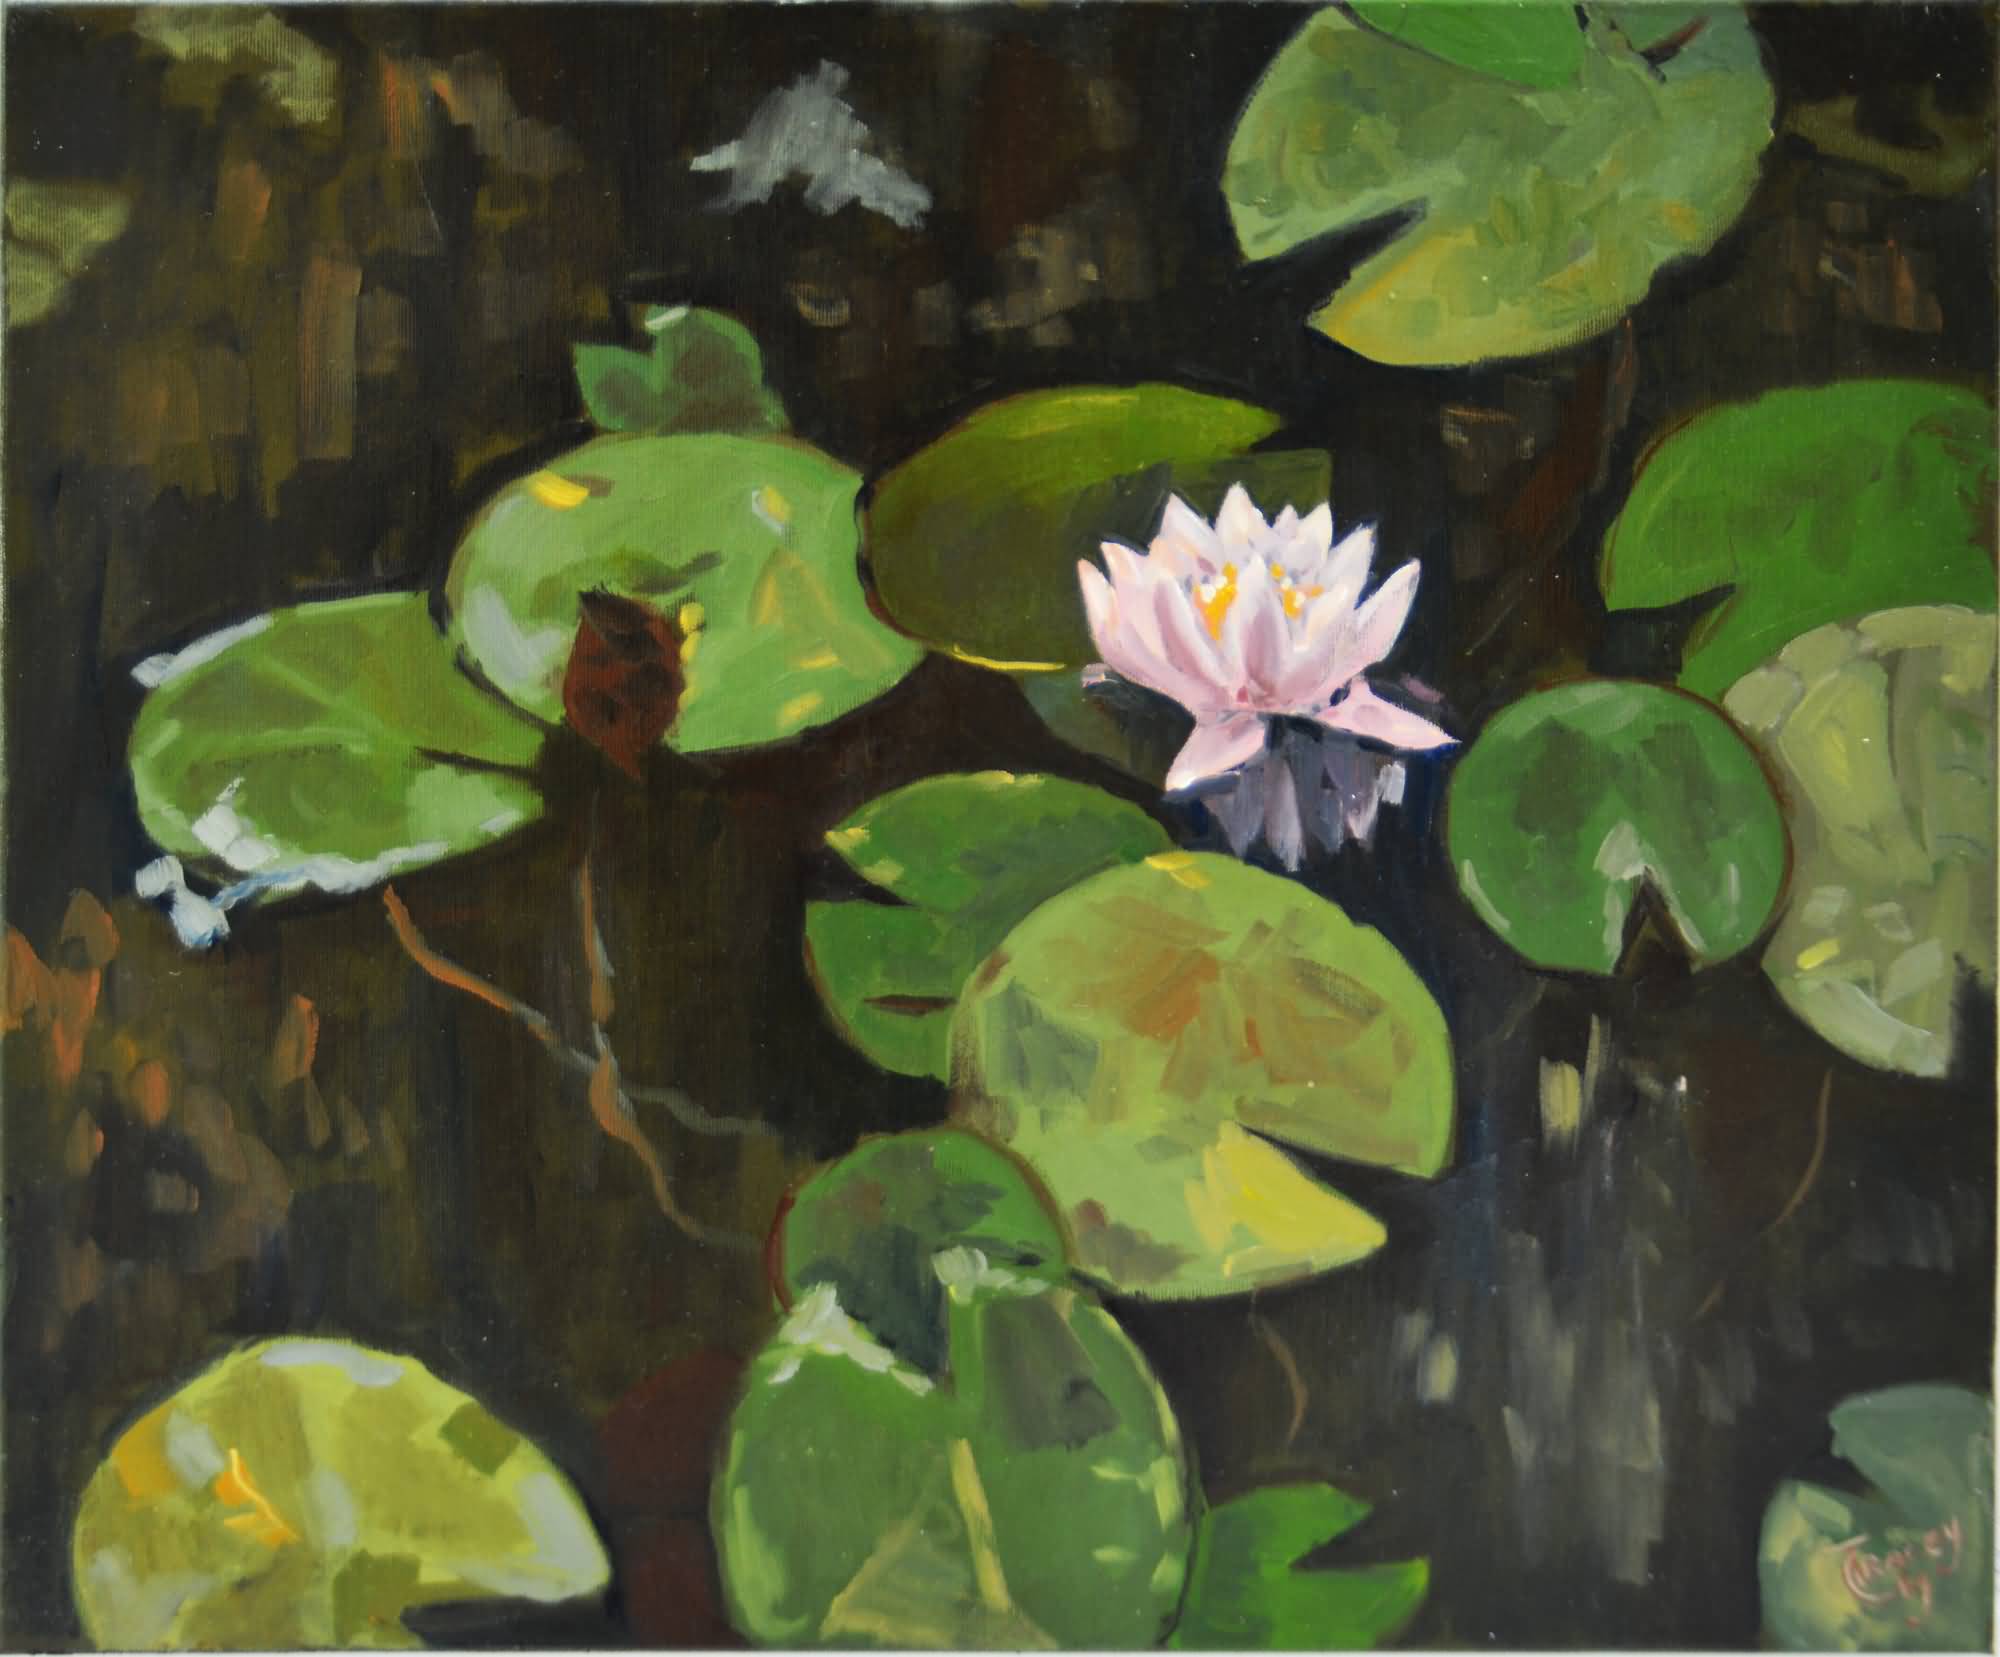 Waterlily pond. Oil on canvas. 50x60cm. 2019